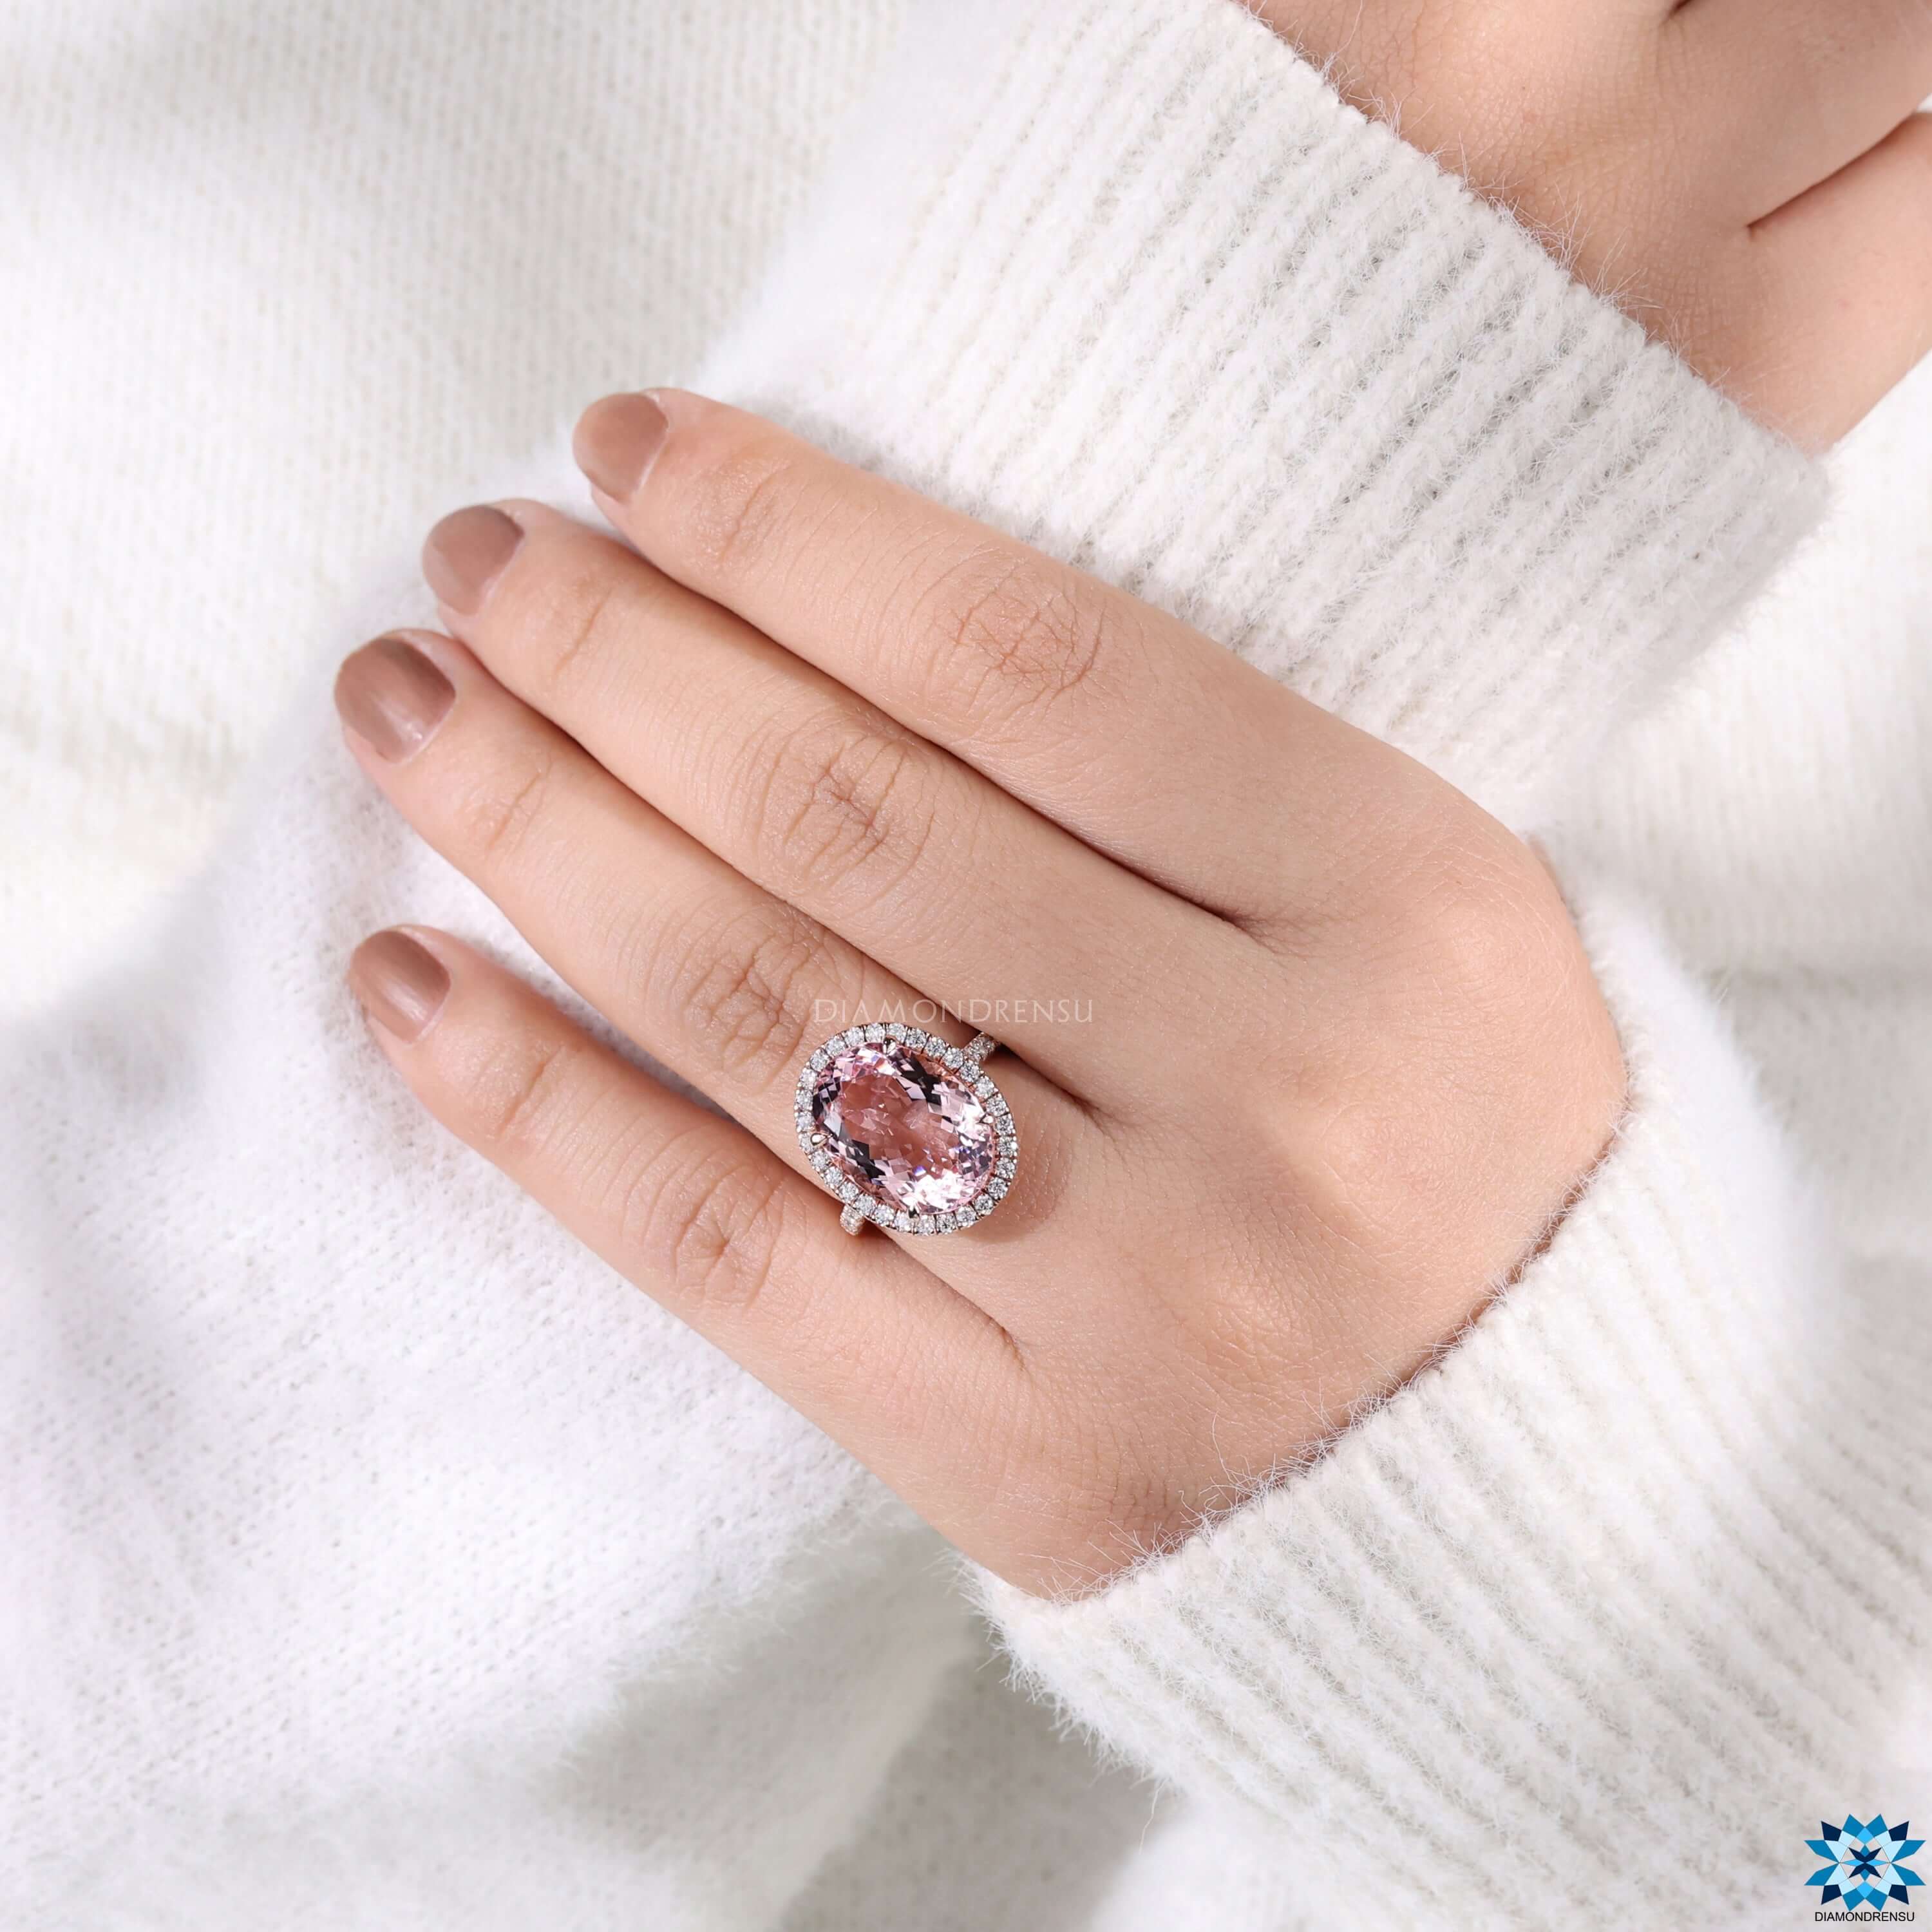 customized ring - diamondrensu